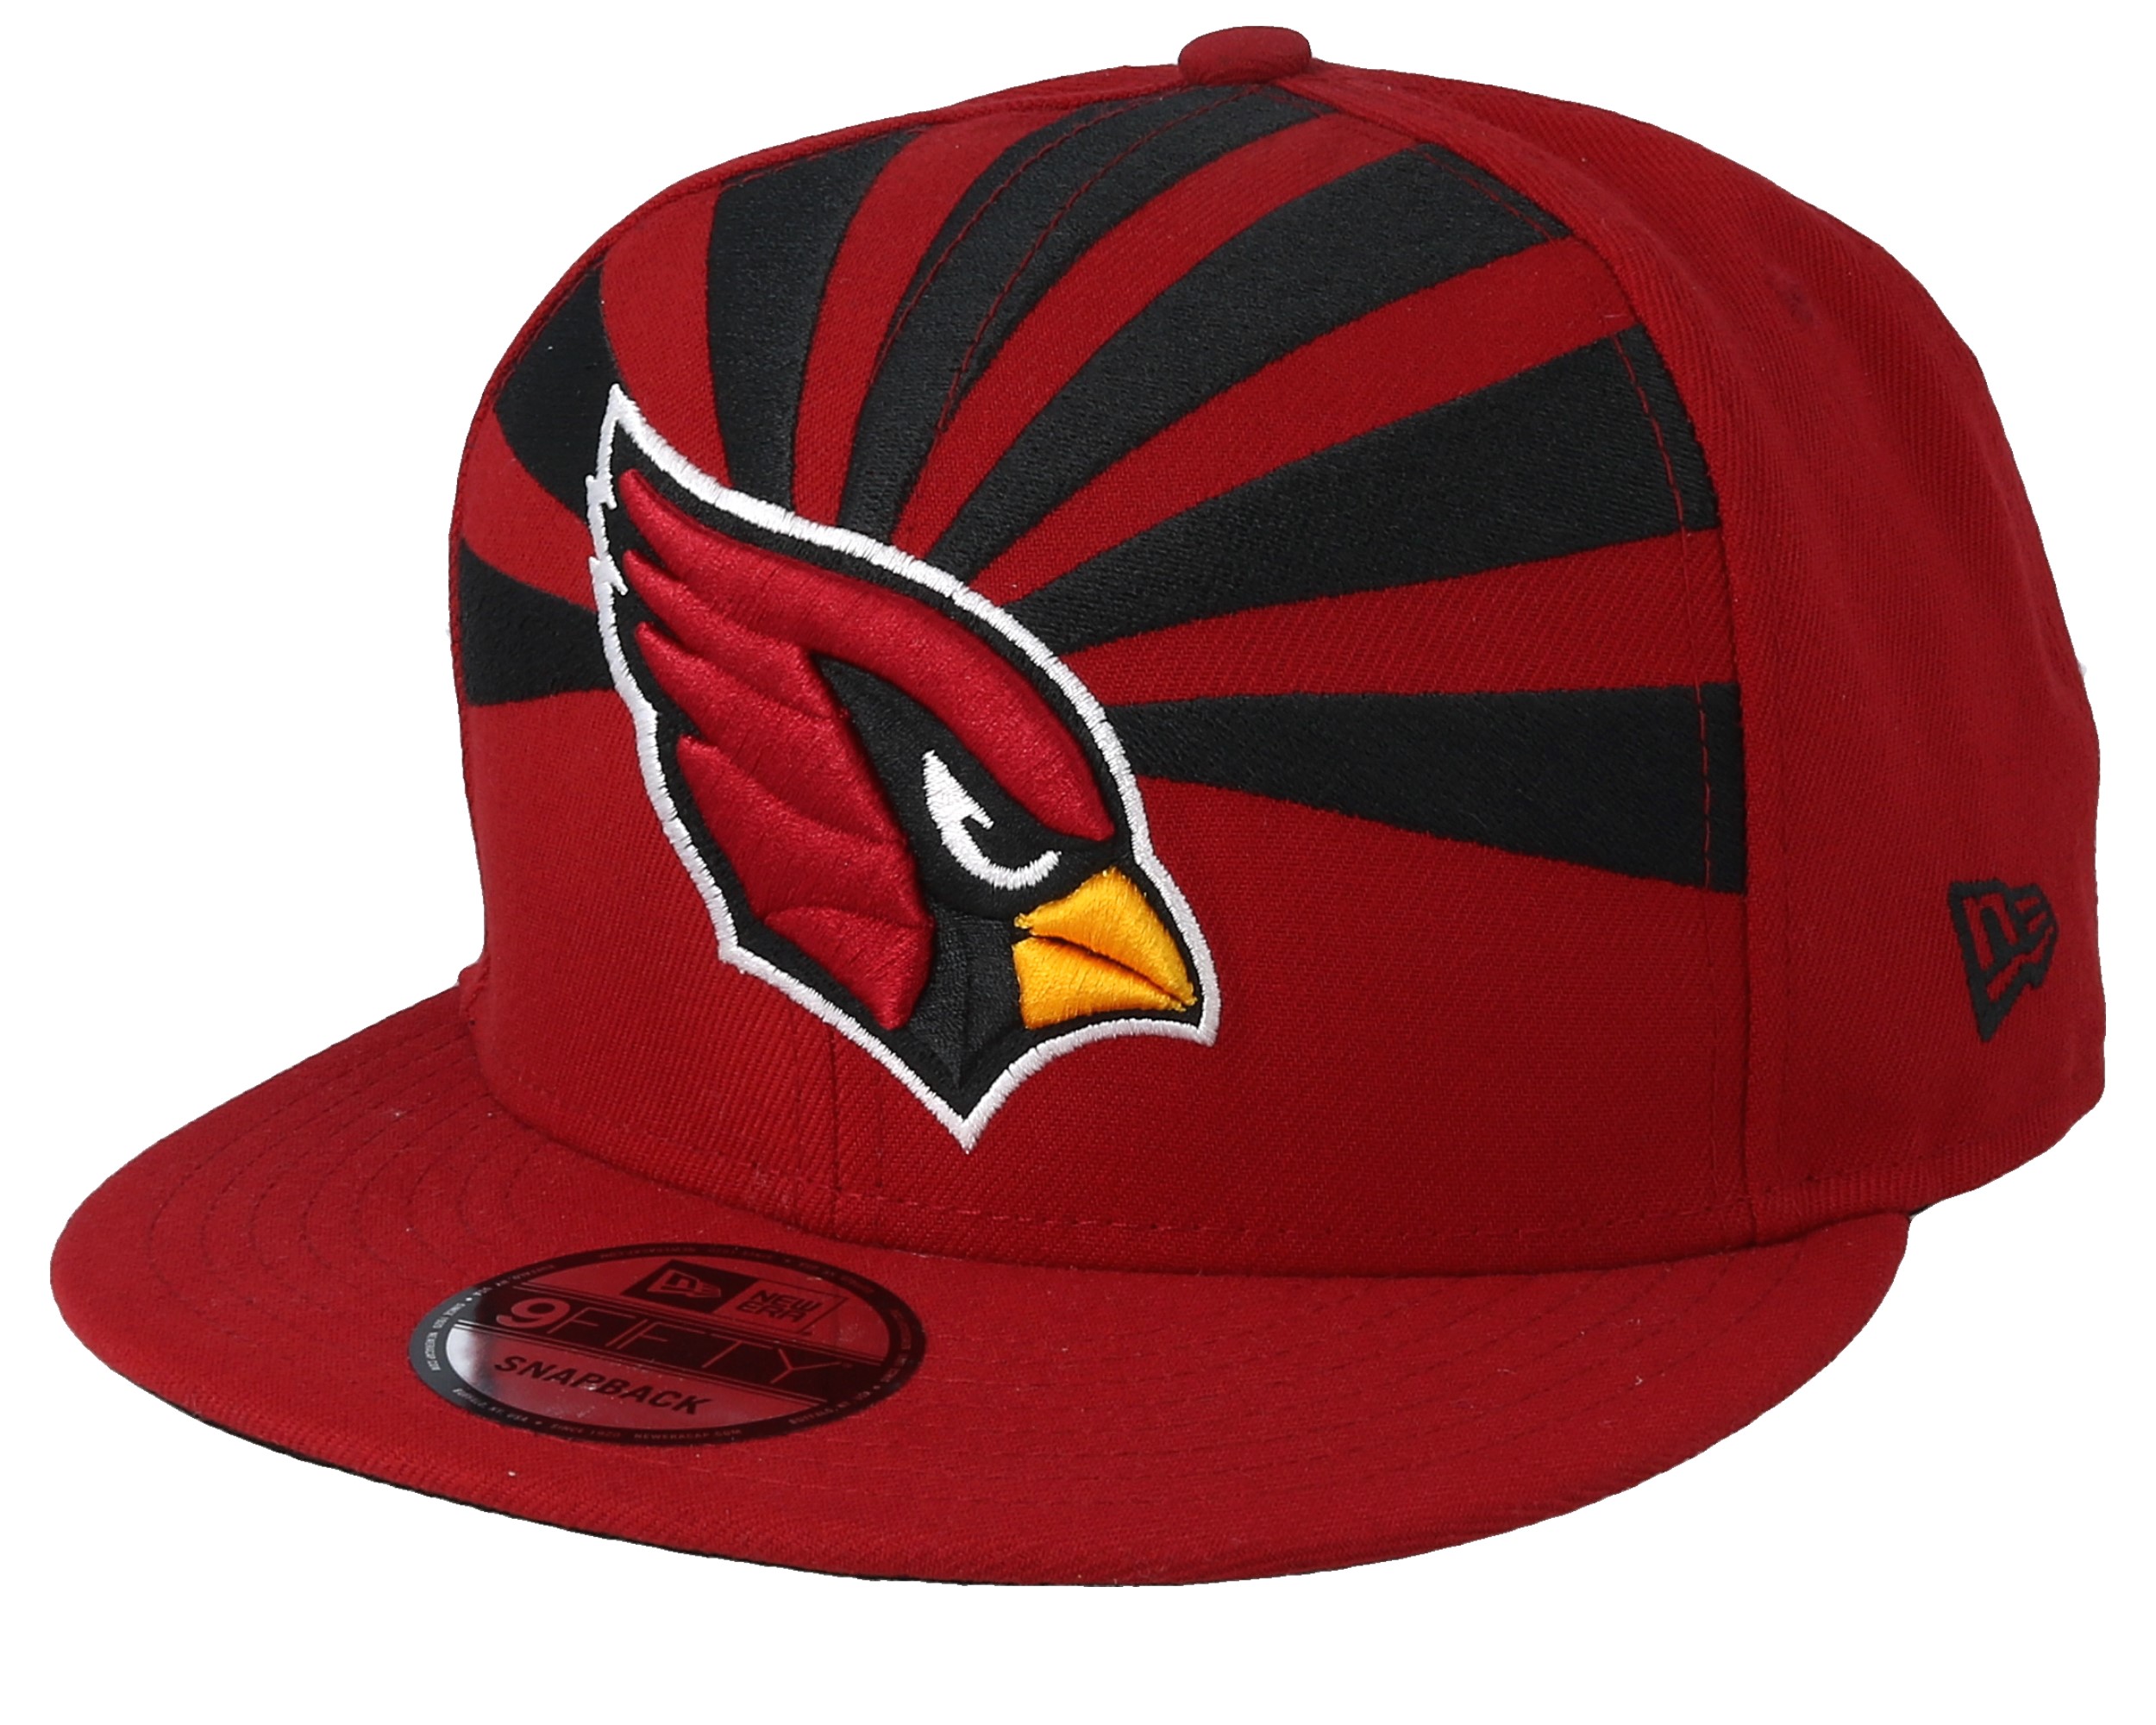 Shop Arizona Cardinals 9Fifty NFL Draft 2019 Red Snapback - New Era caps on...